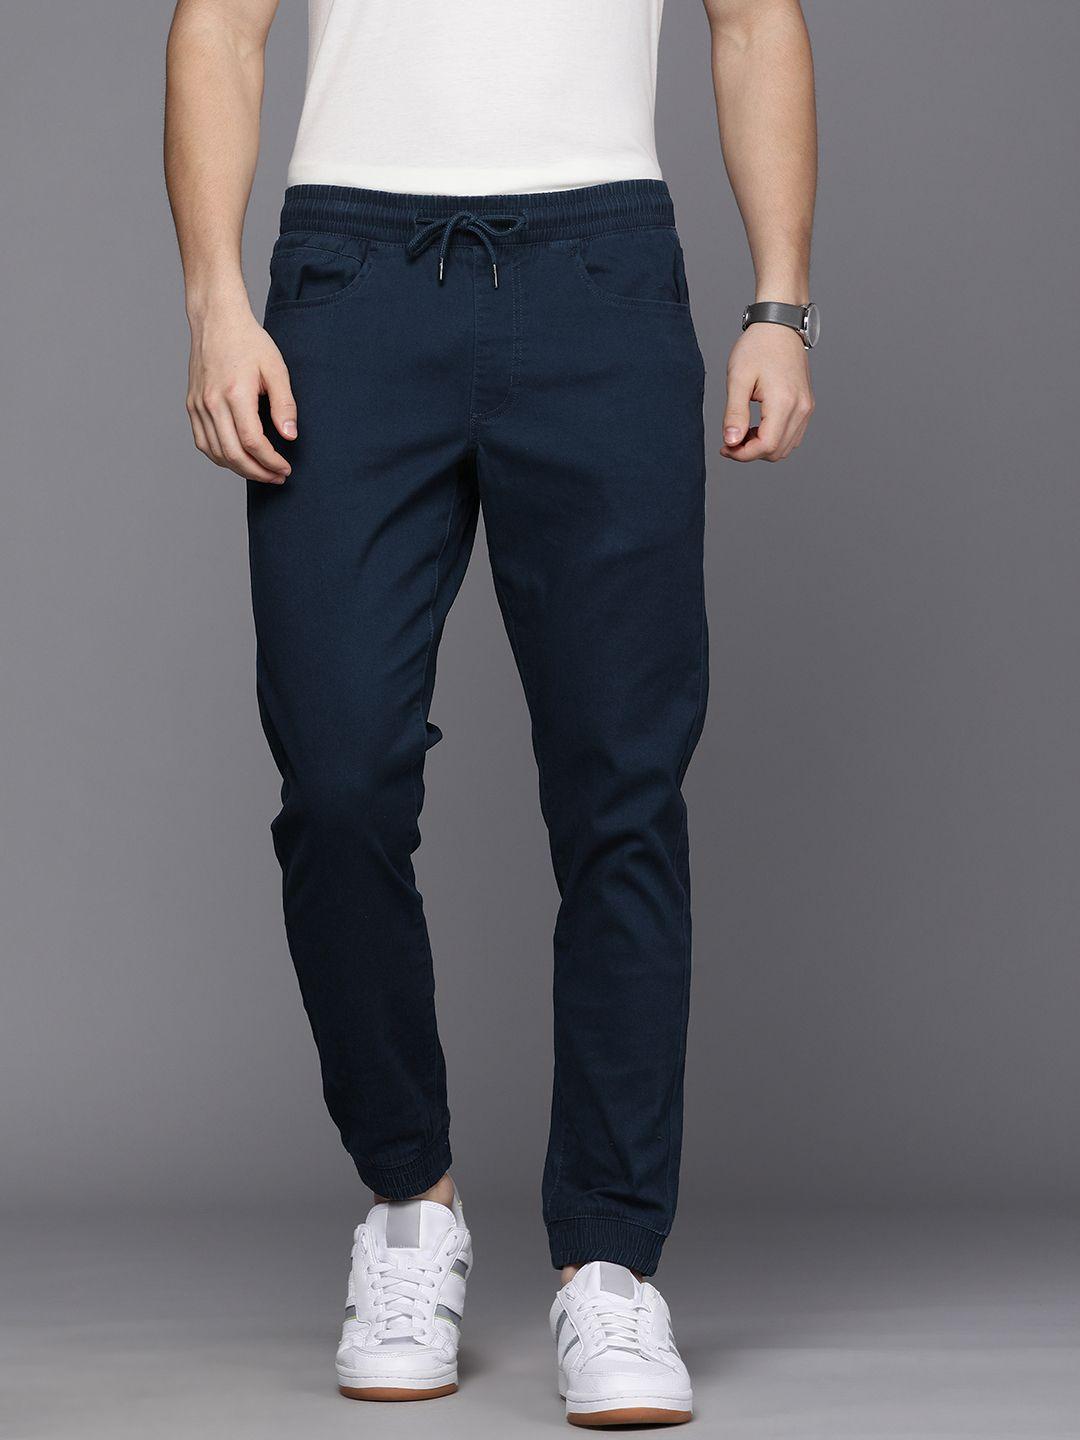 louis-philippe-jeans-men-navy-blue-joggers-fit-low-rise--trousers